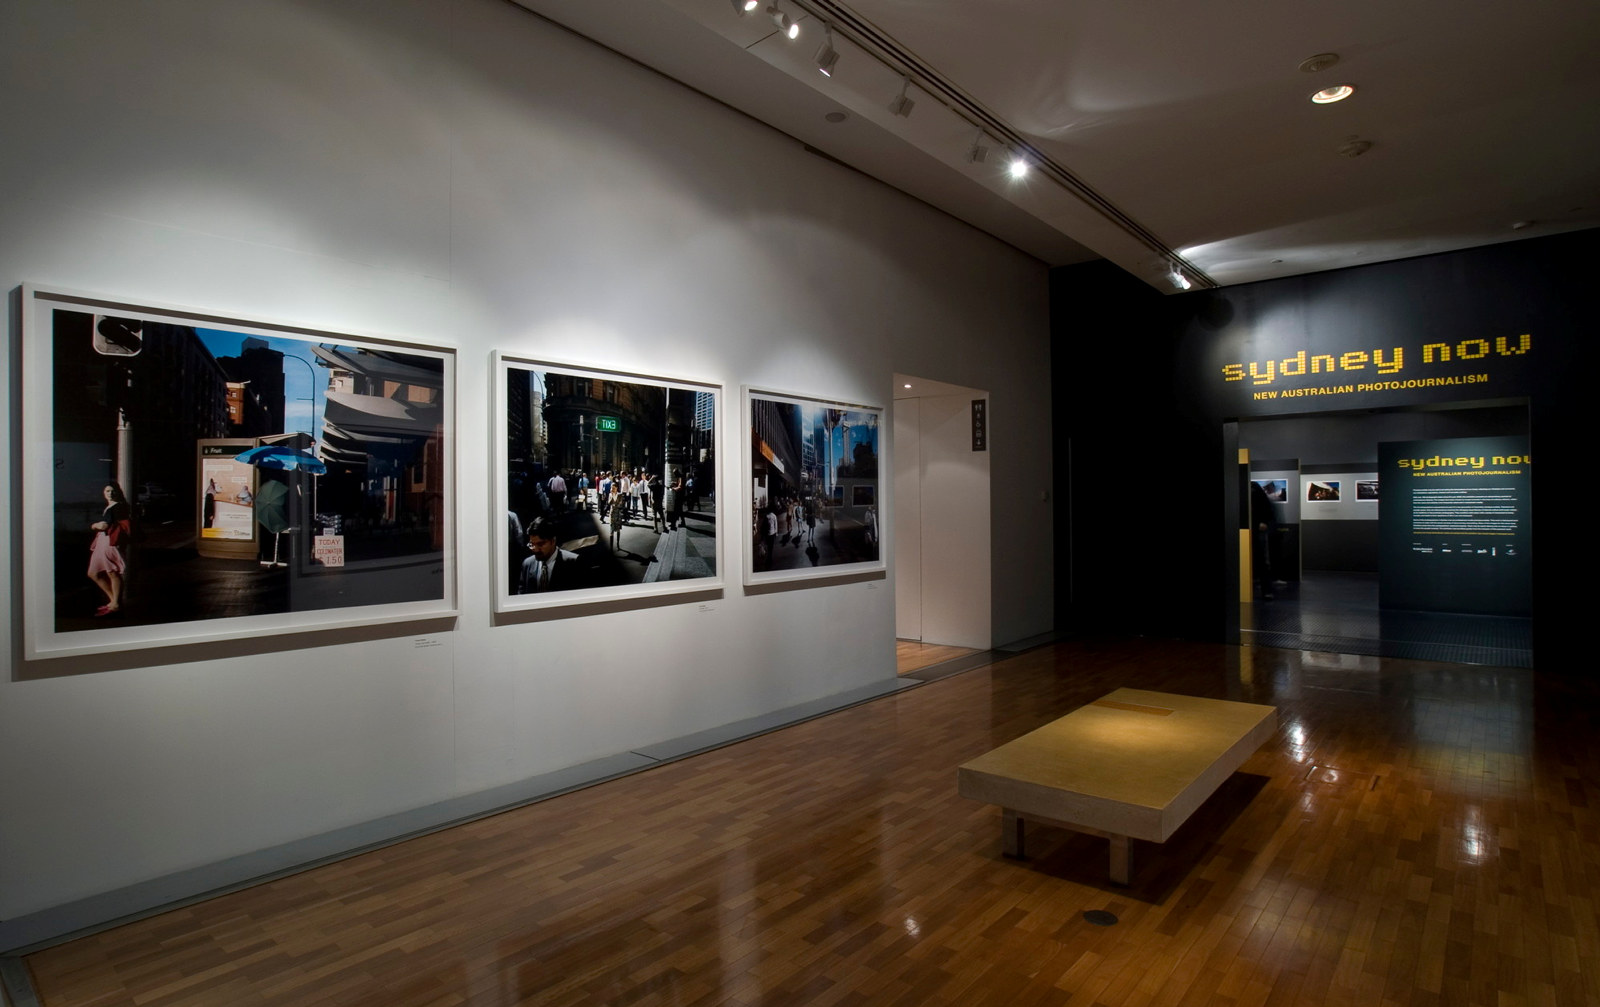 Sydney now: new Australian photojournalism installation view